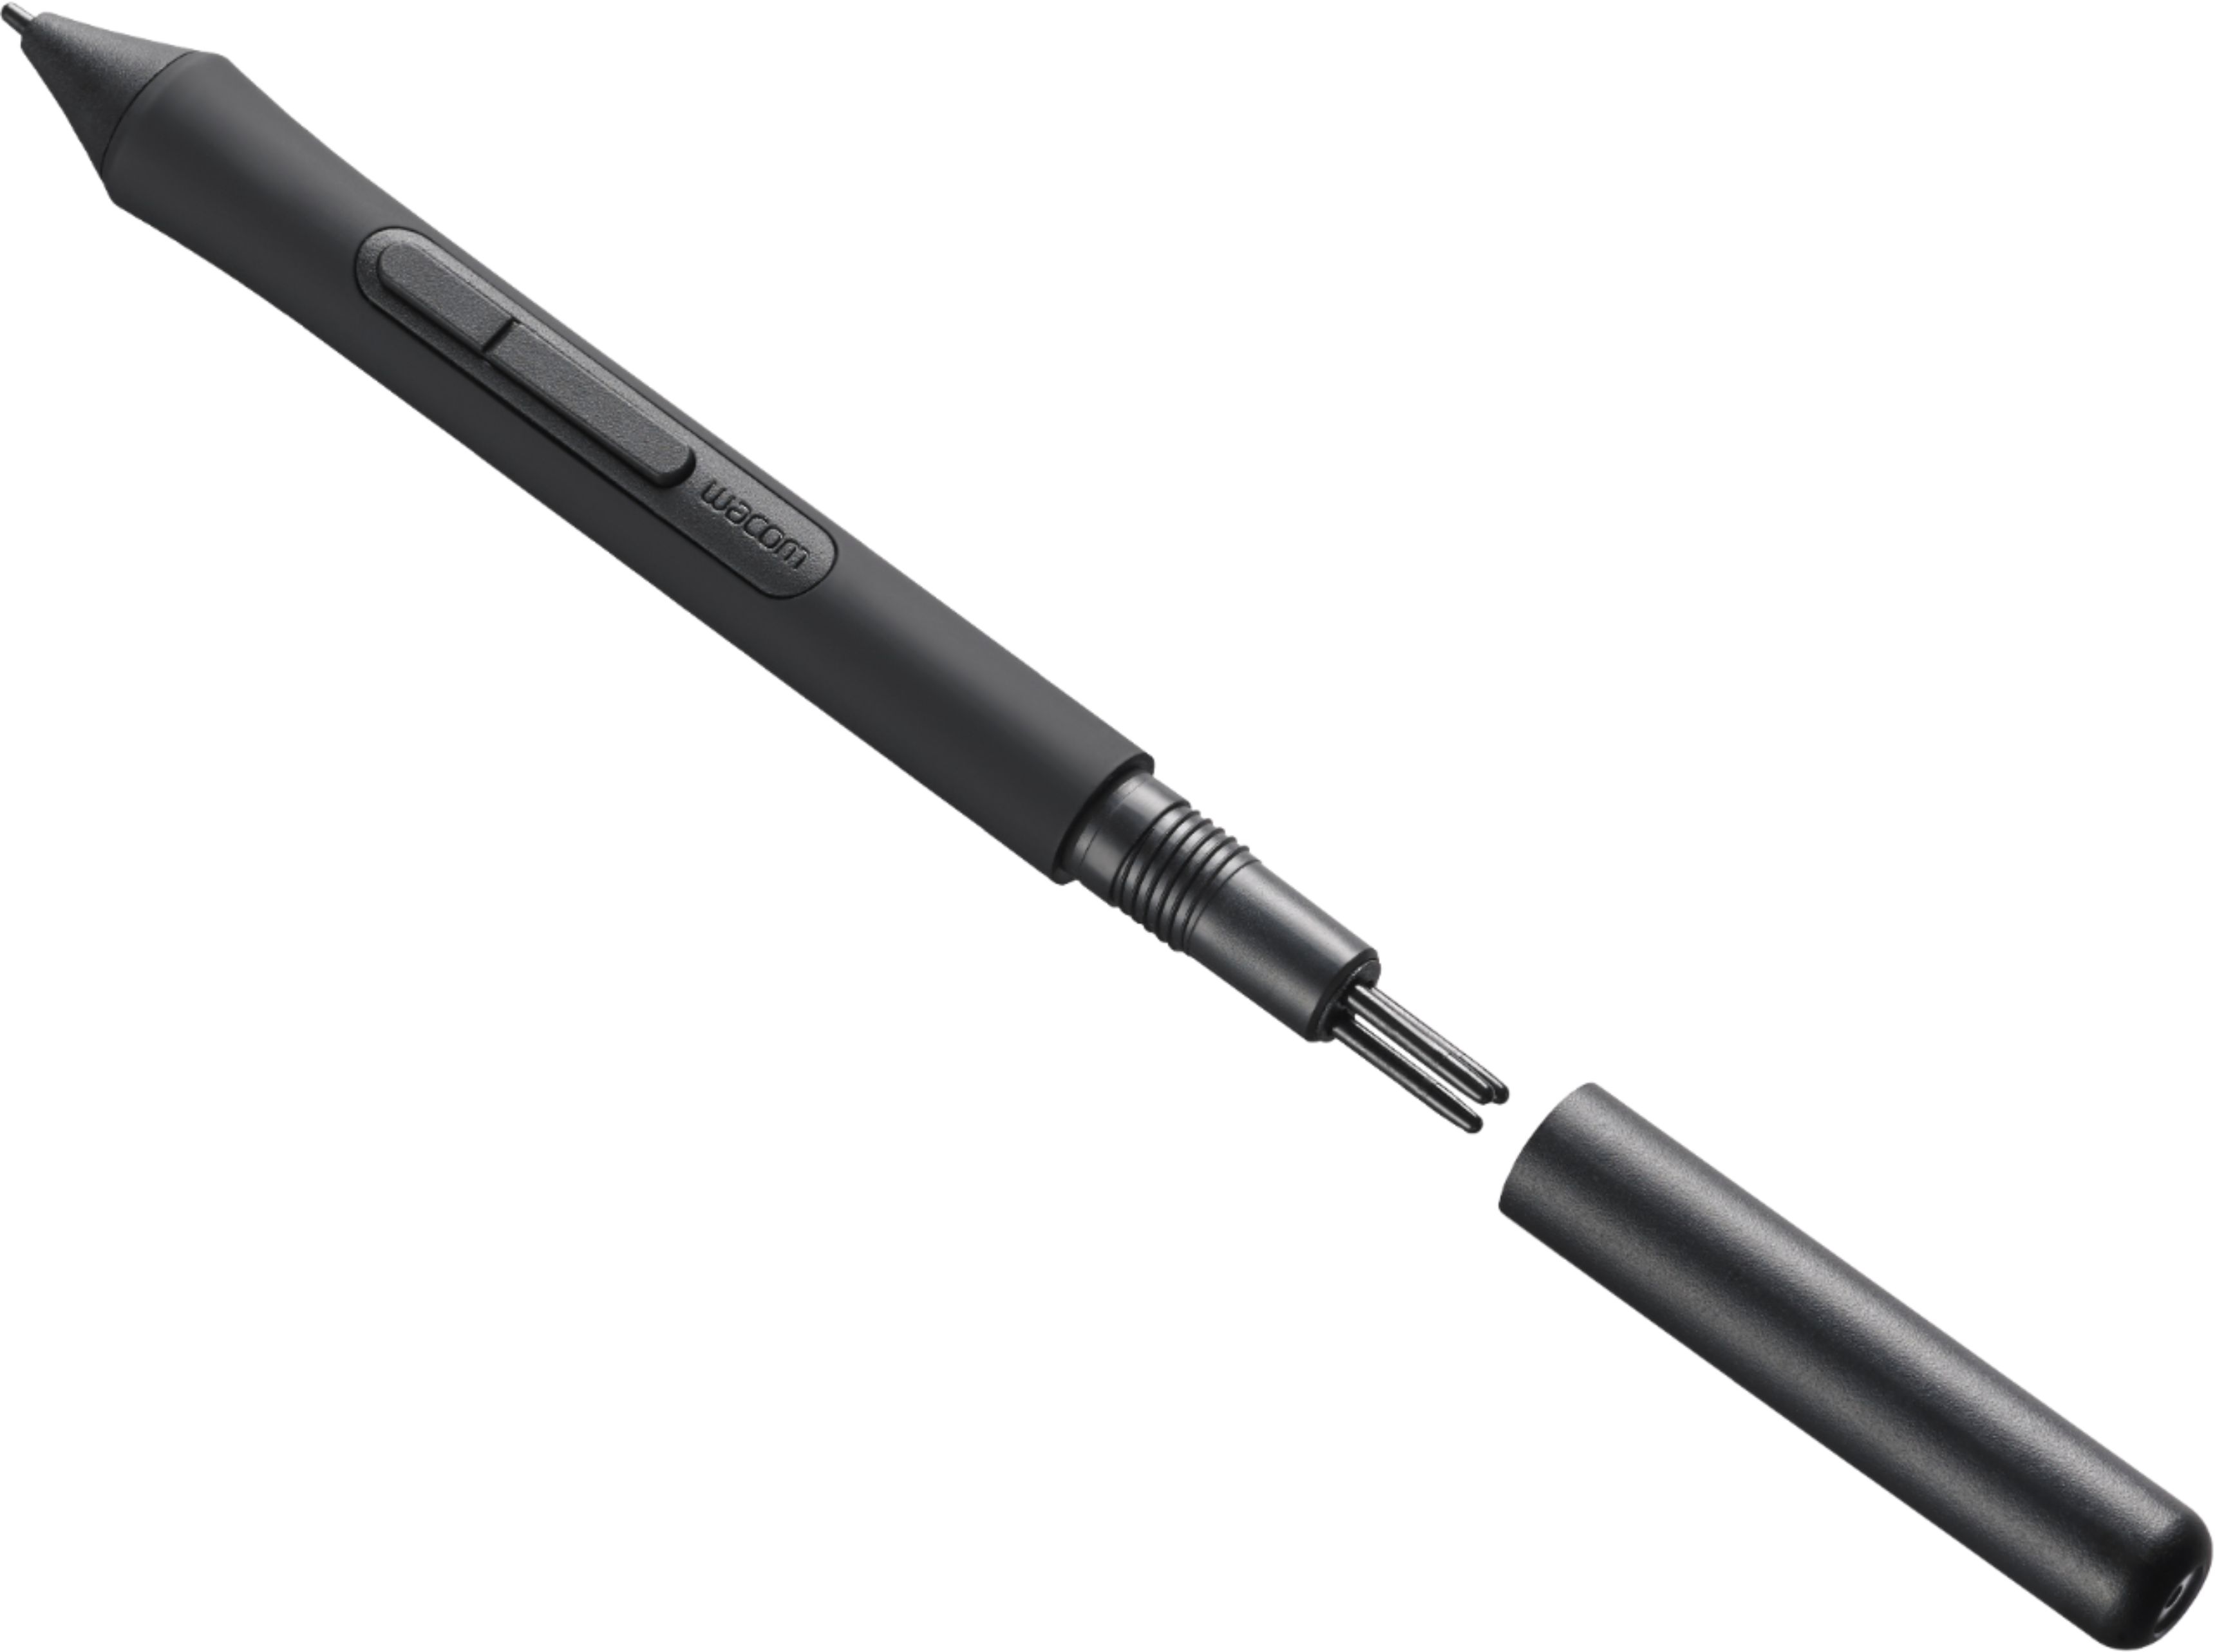 Wacom LP1100K 4K Pen for Intuos